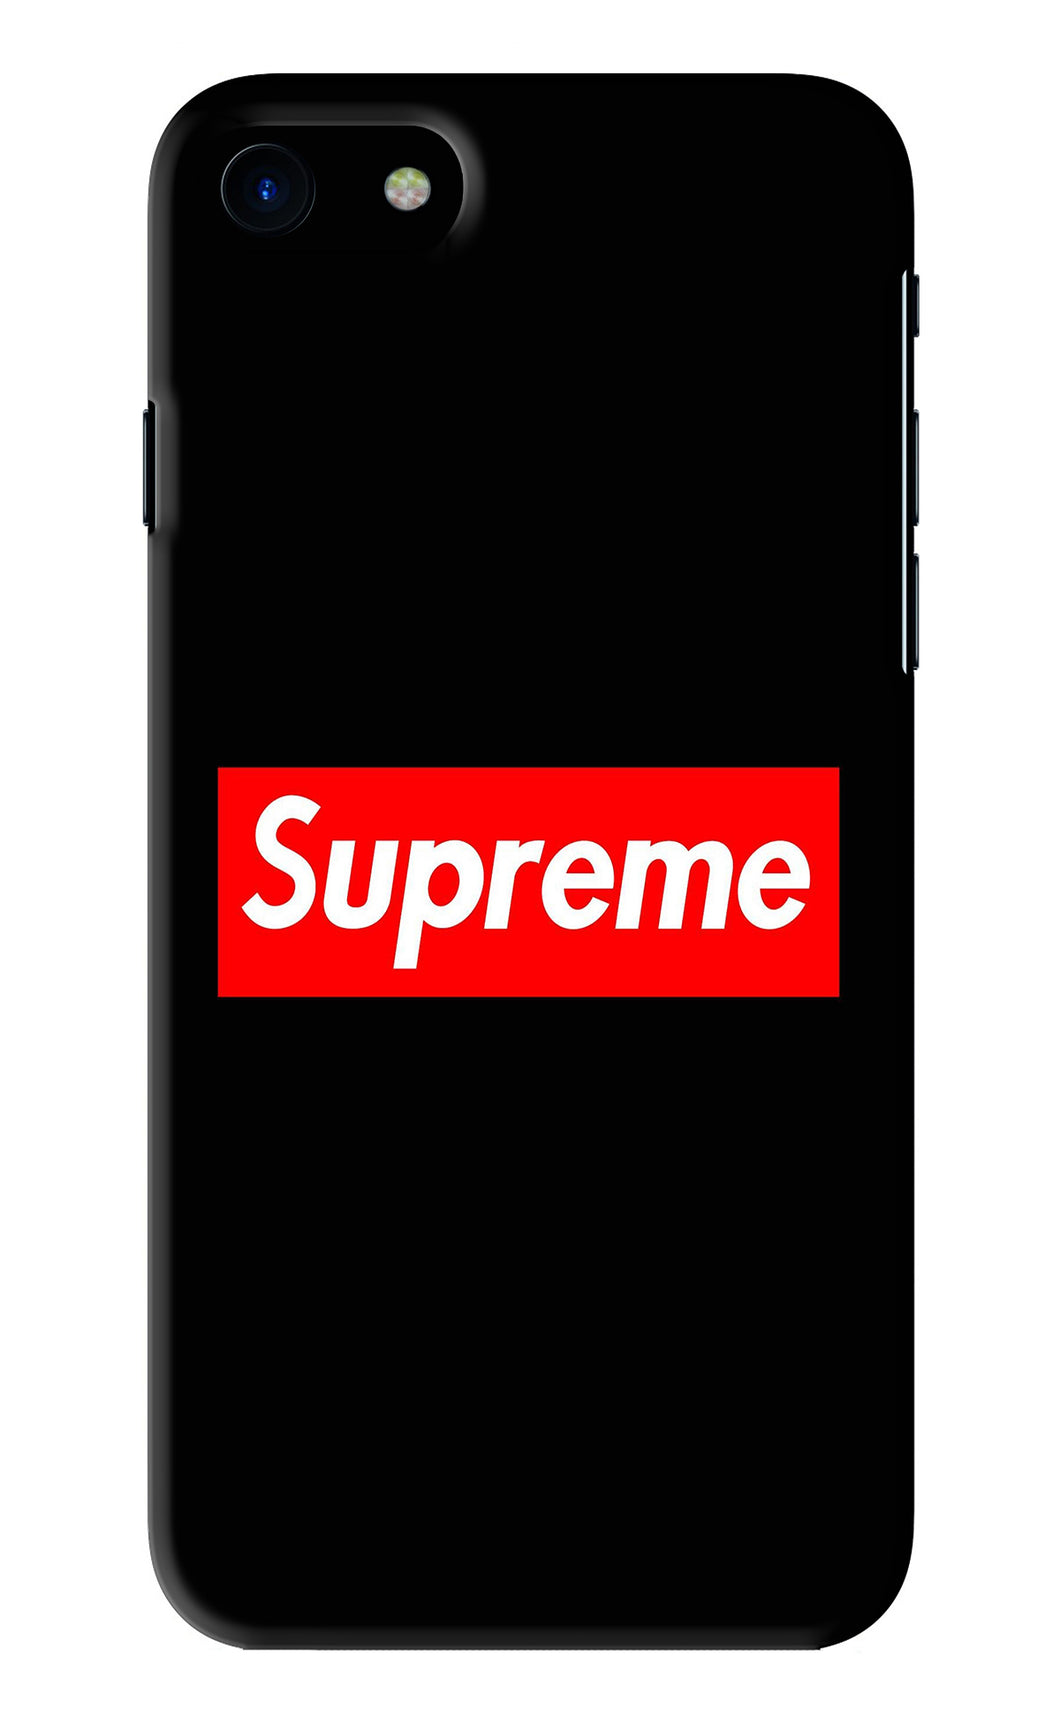 Supreme iPhone SE 2020 Back Skin Wrap